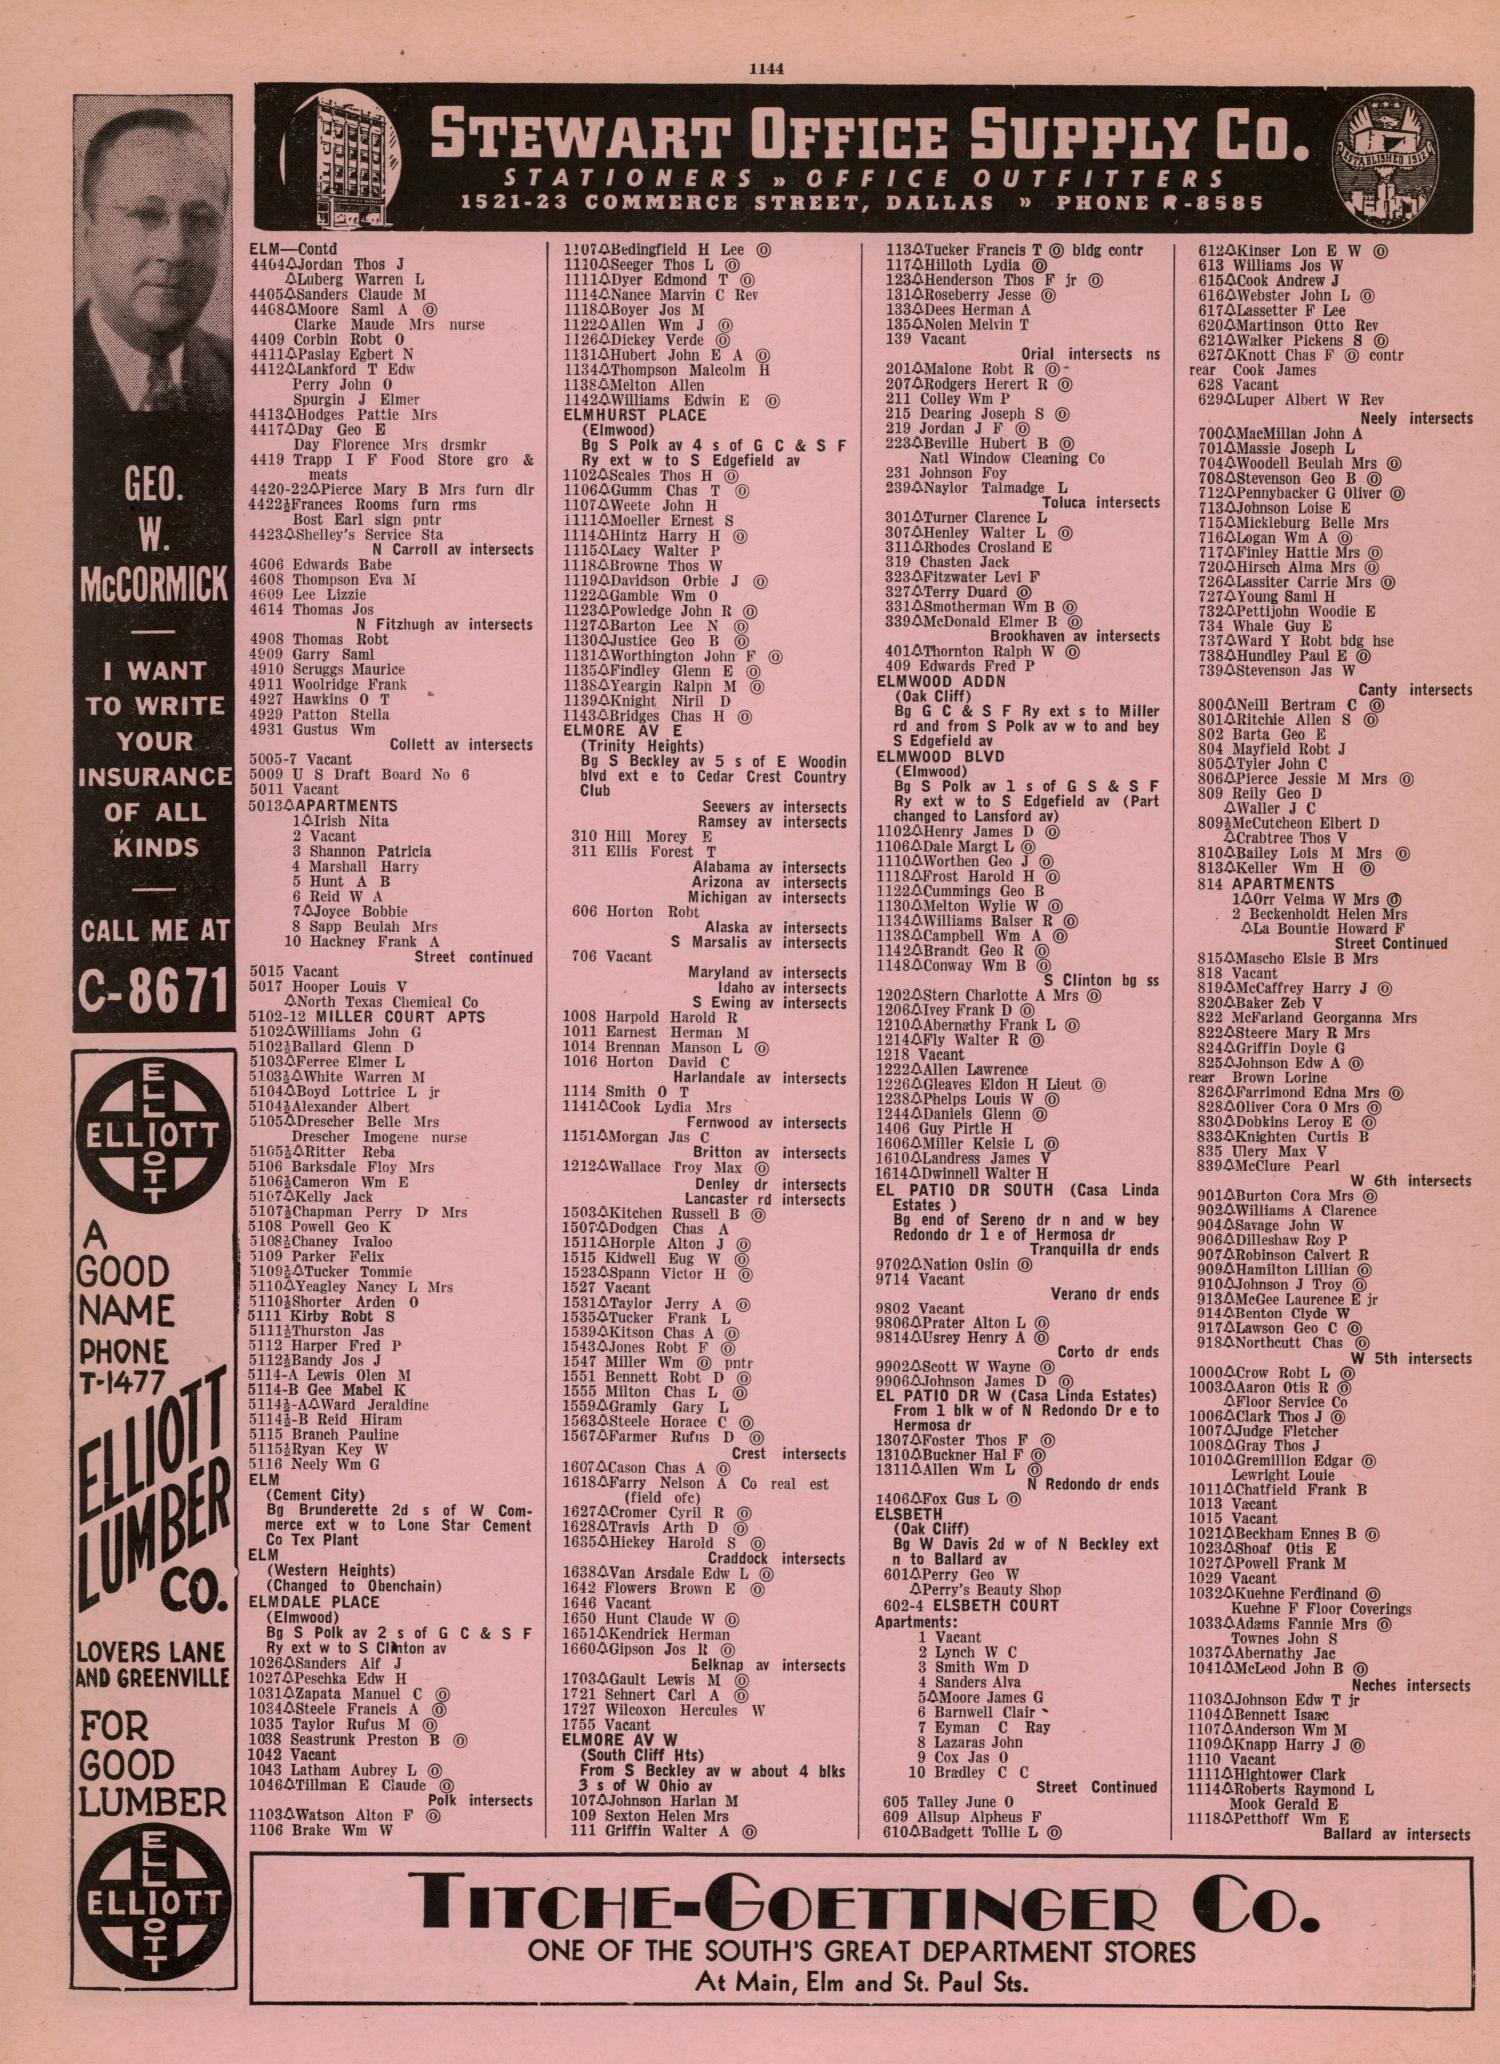 Dallas City Directory, 1941
                                                
                                                    1144
                                                